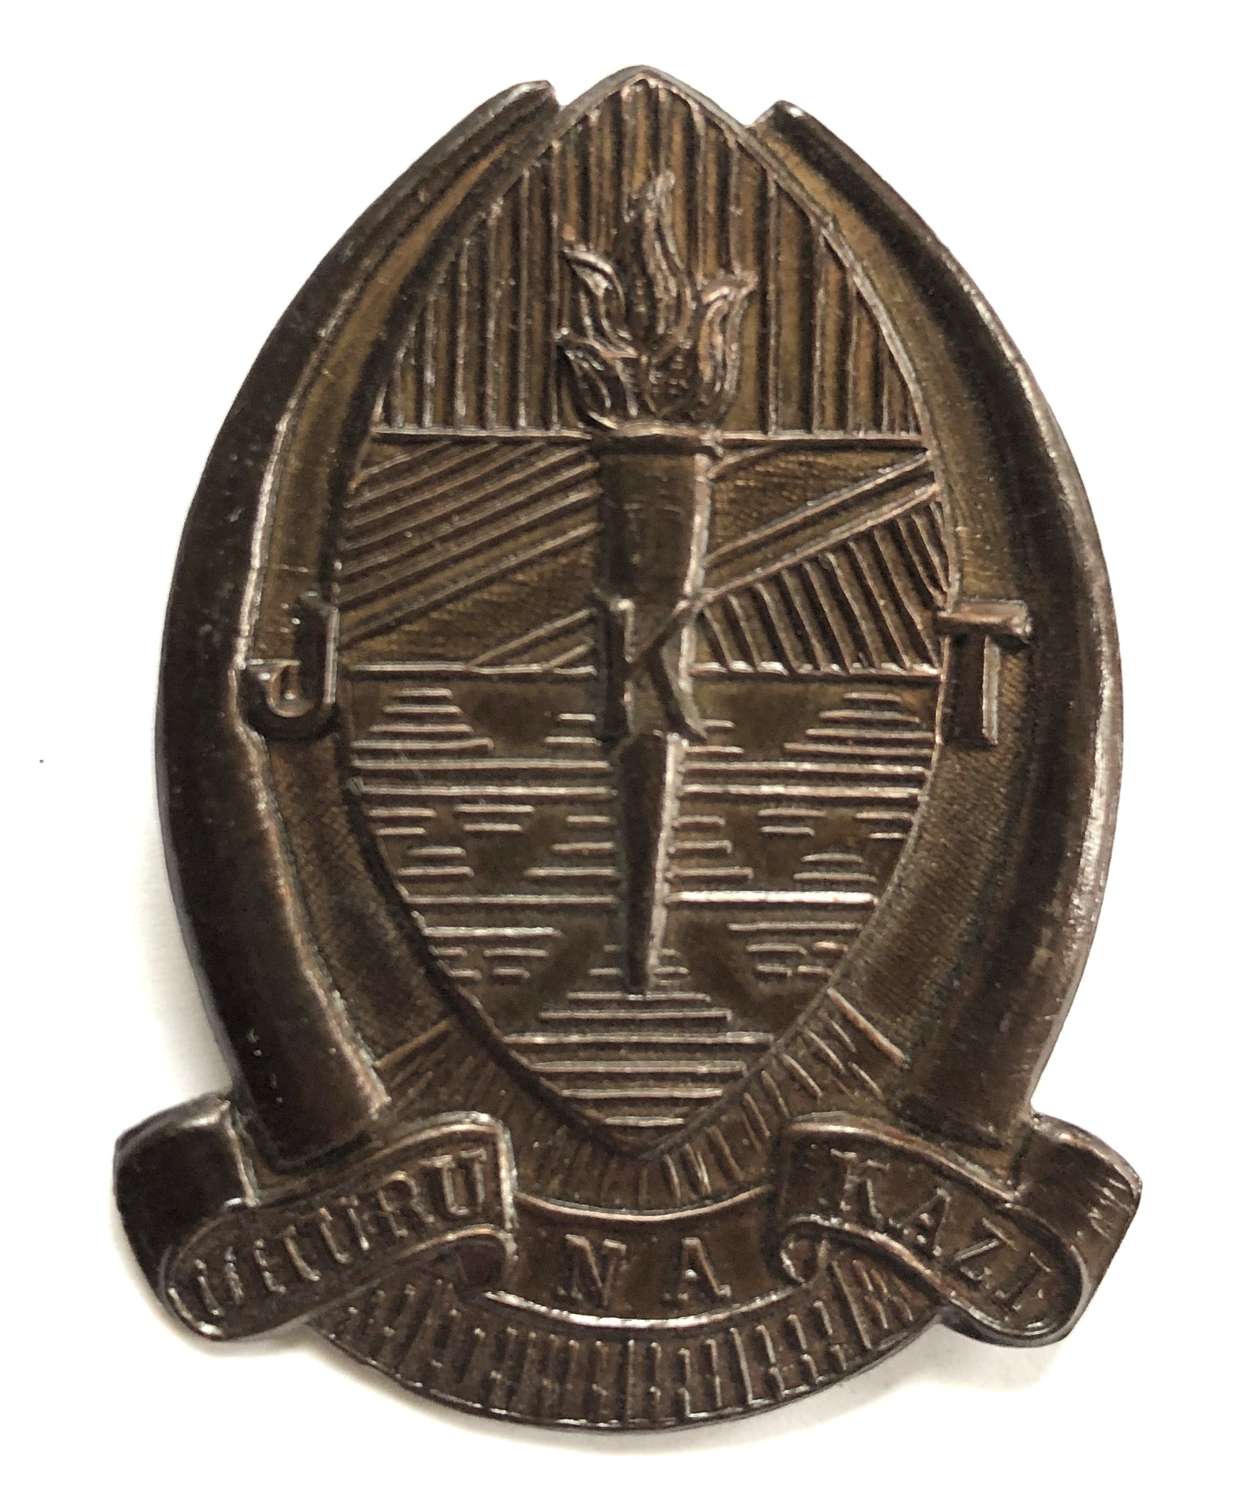 Tanzania National Service Army bronze cap badge